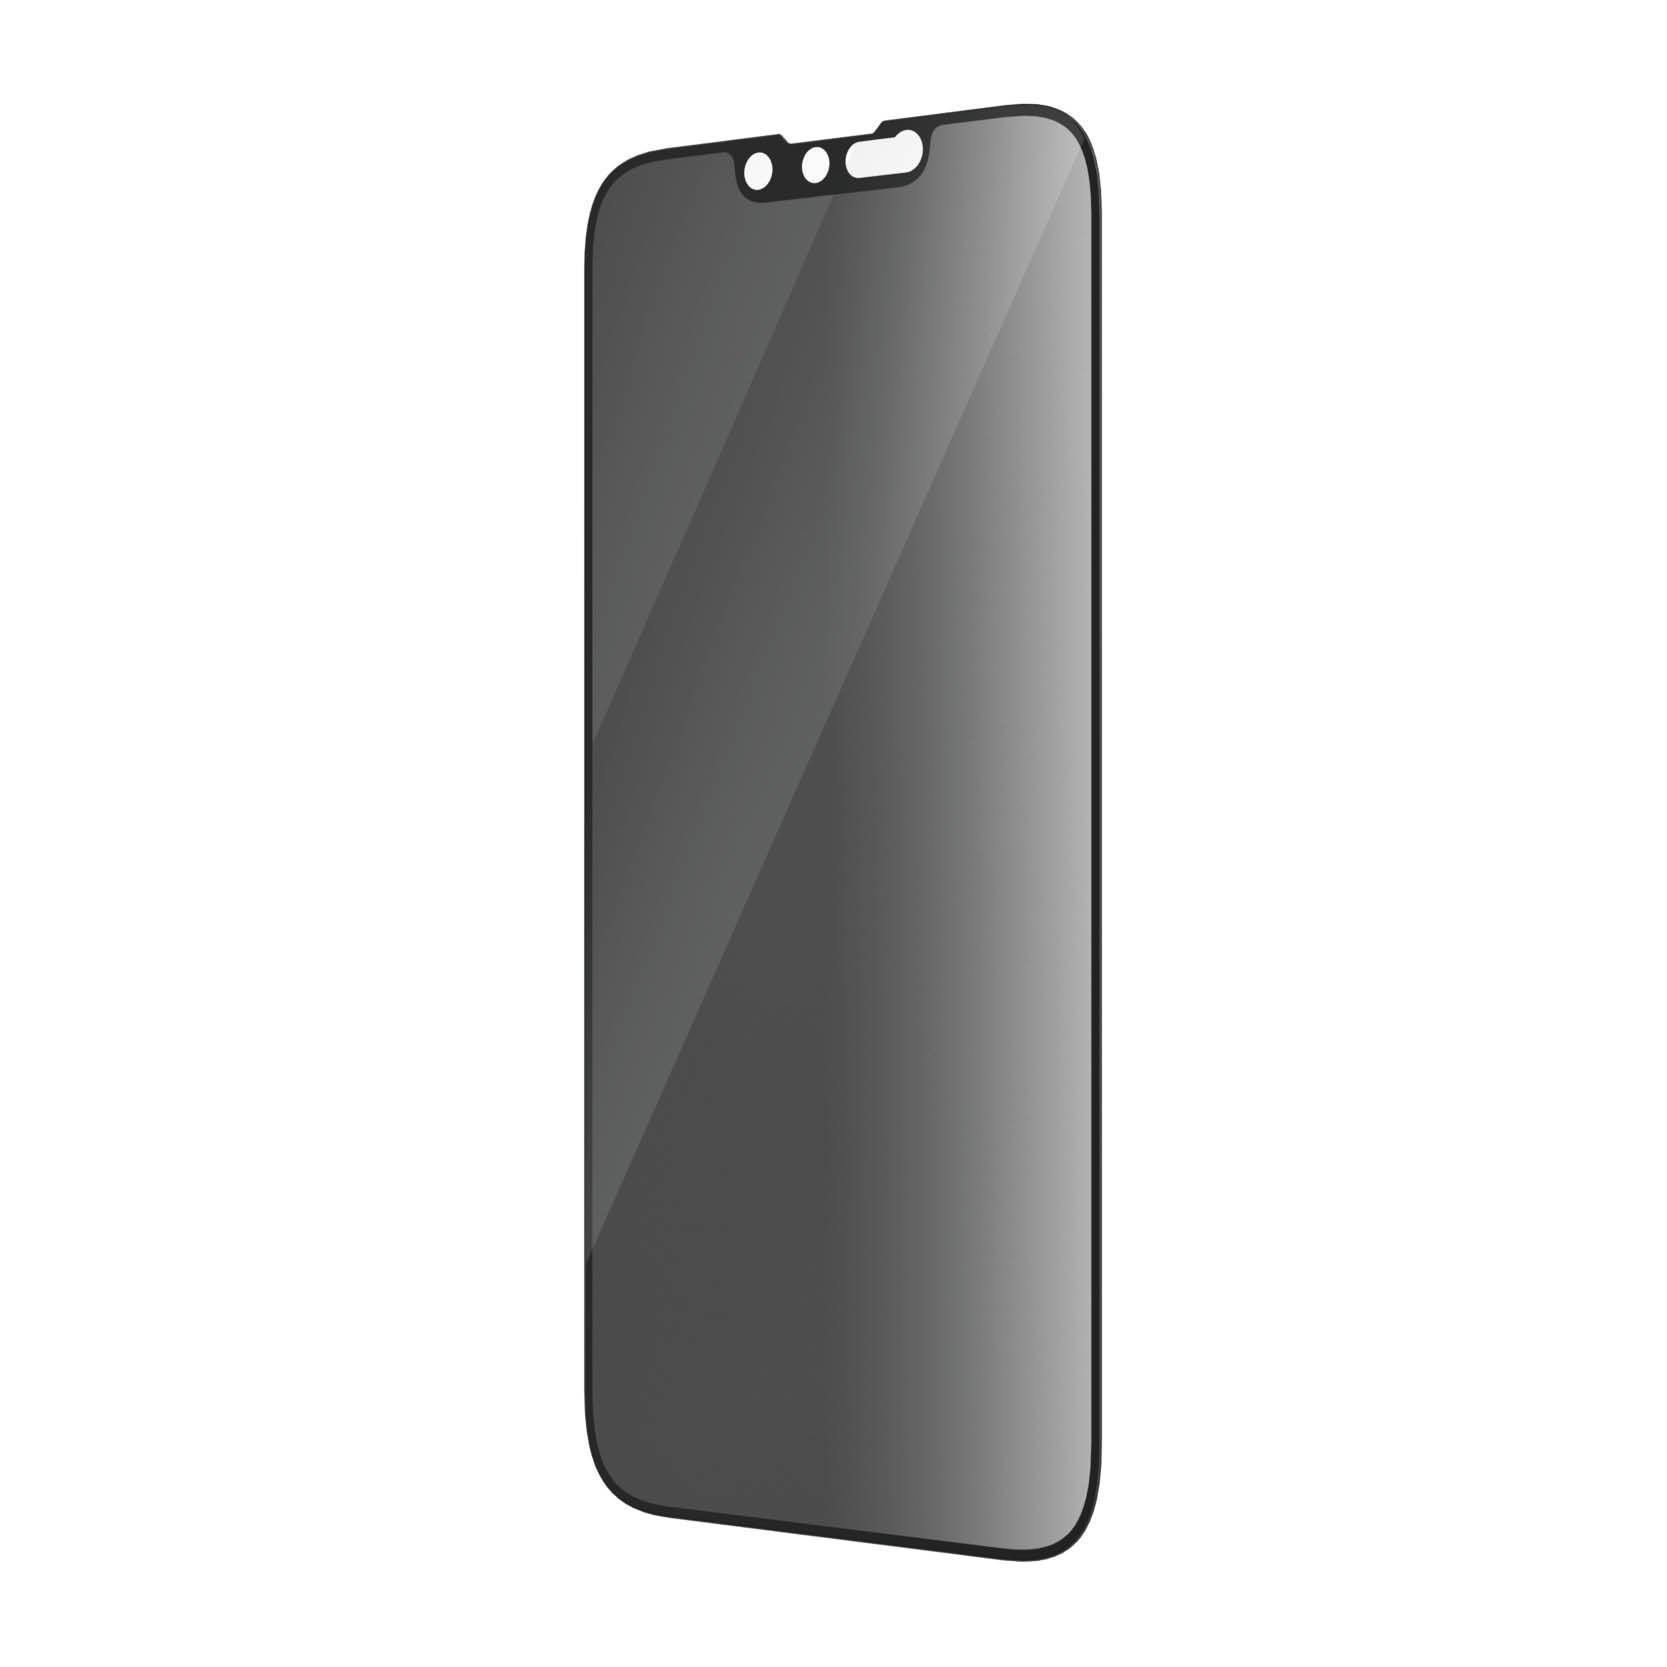 PanzerGlass Displayschutzglas »iPhone 14/13/13 Pro Ultrawide Privacy AB«